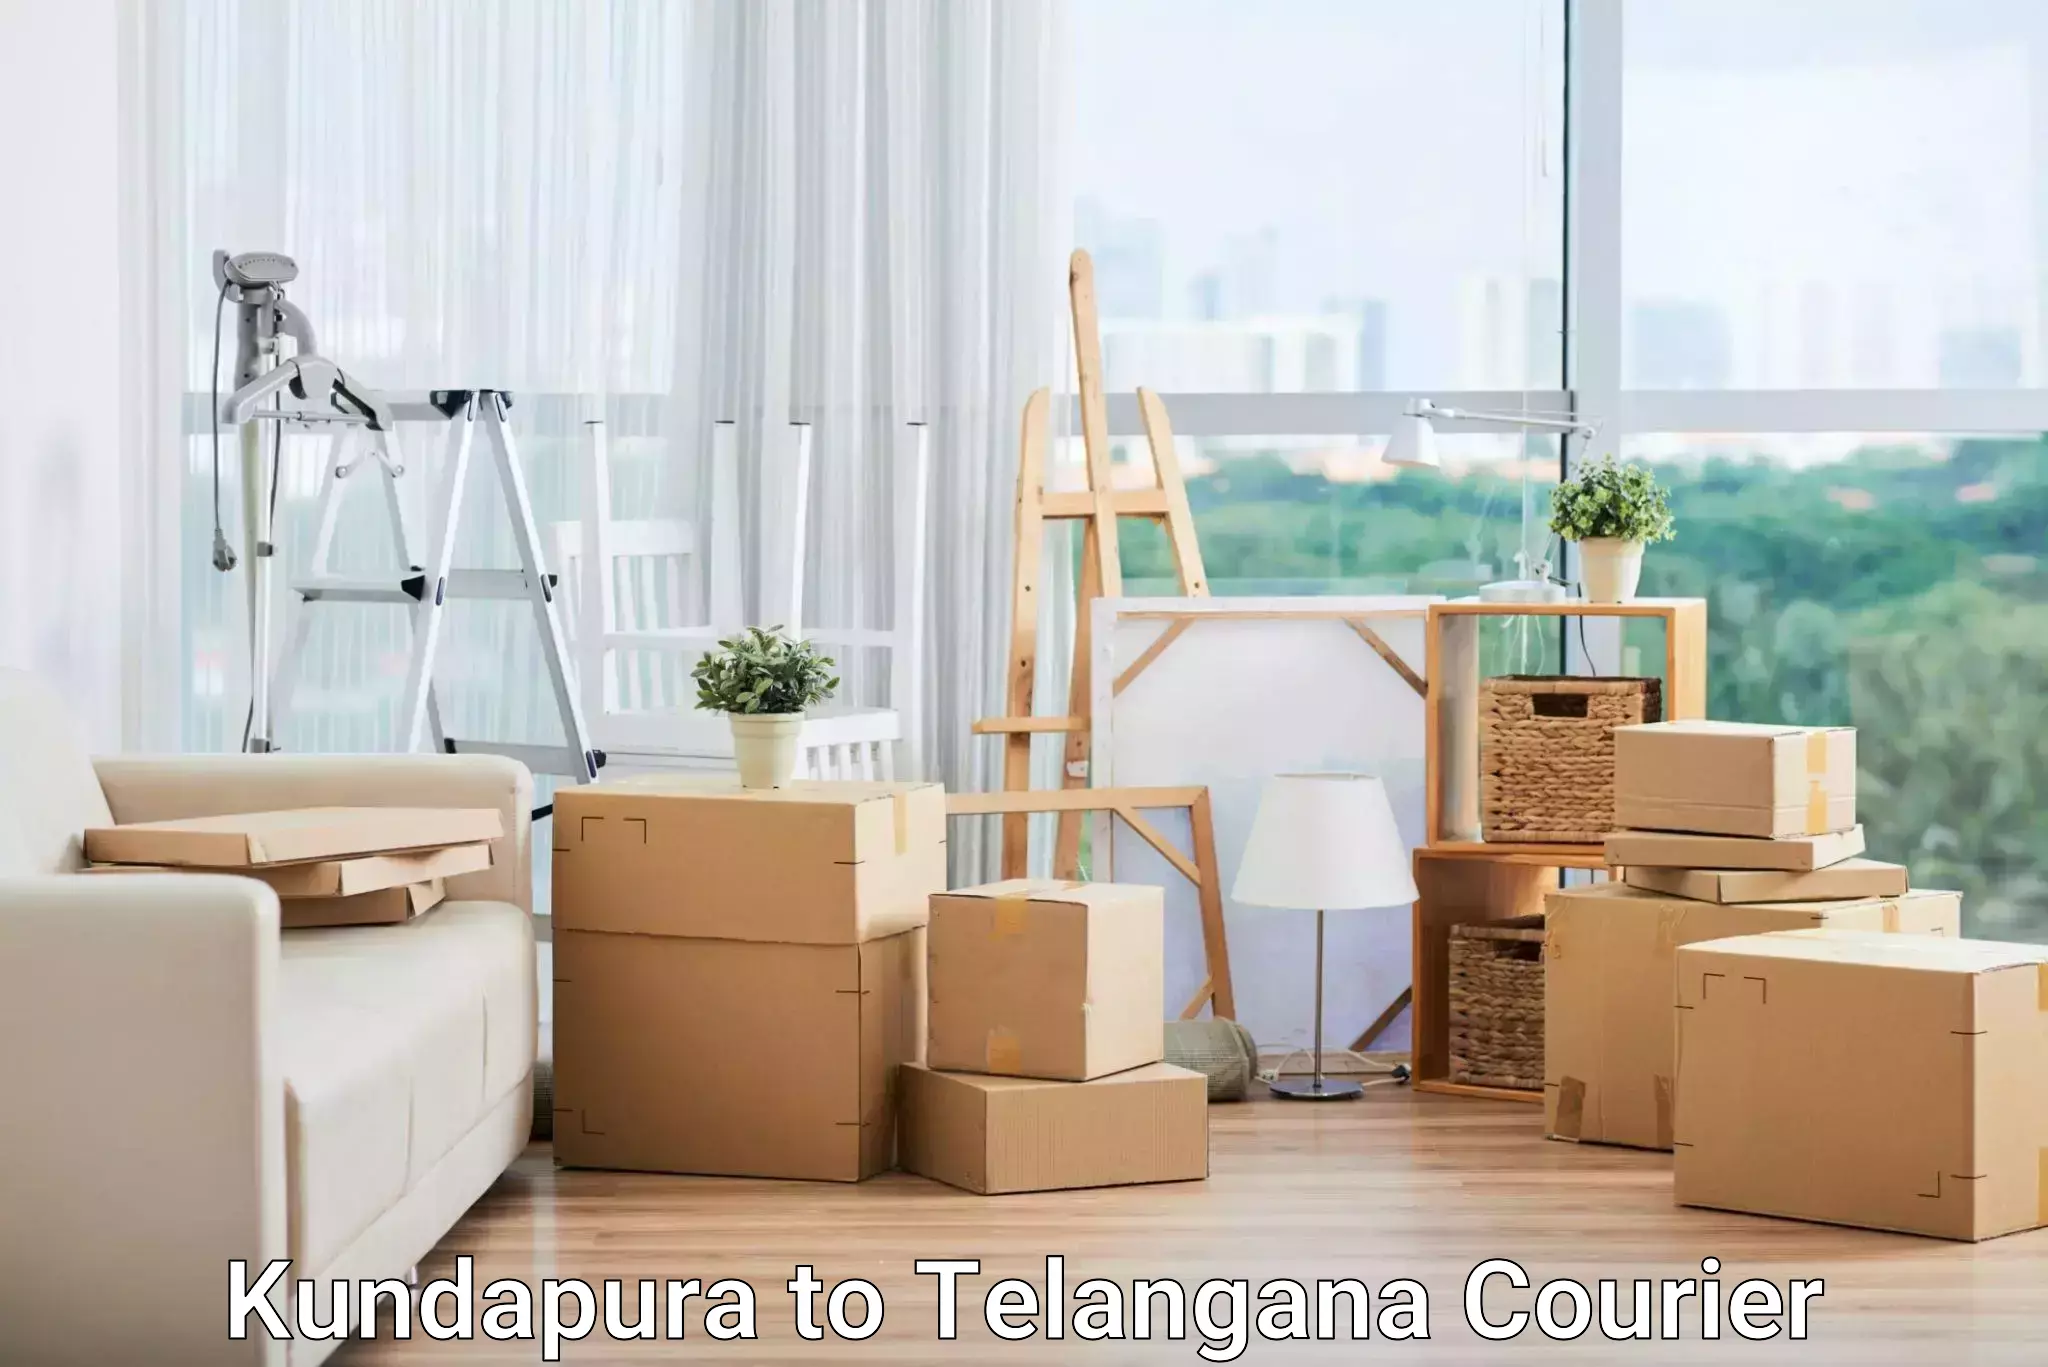 Efficient parcel tracking Kundapura to Yellareddy